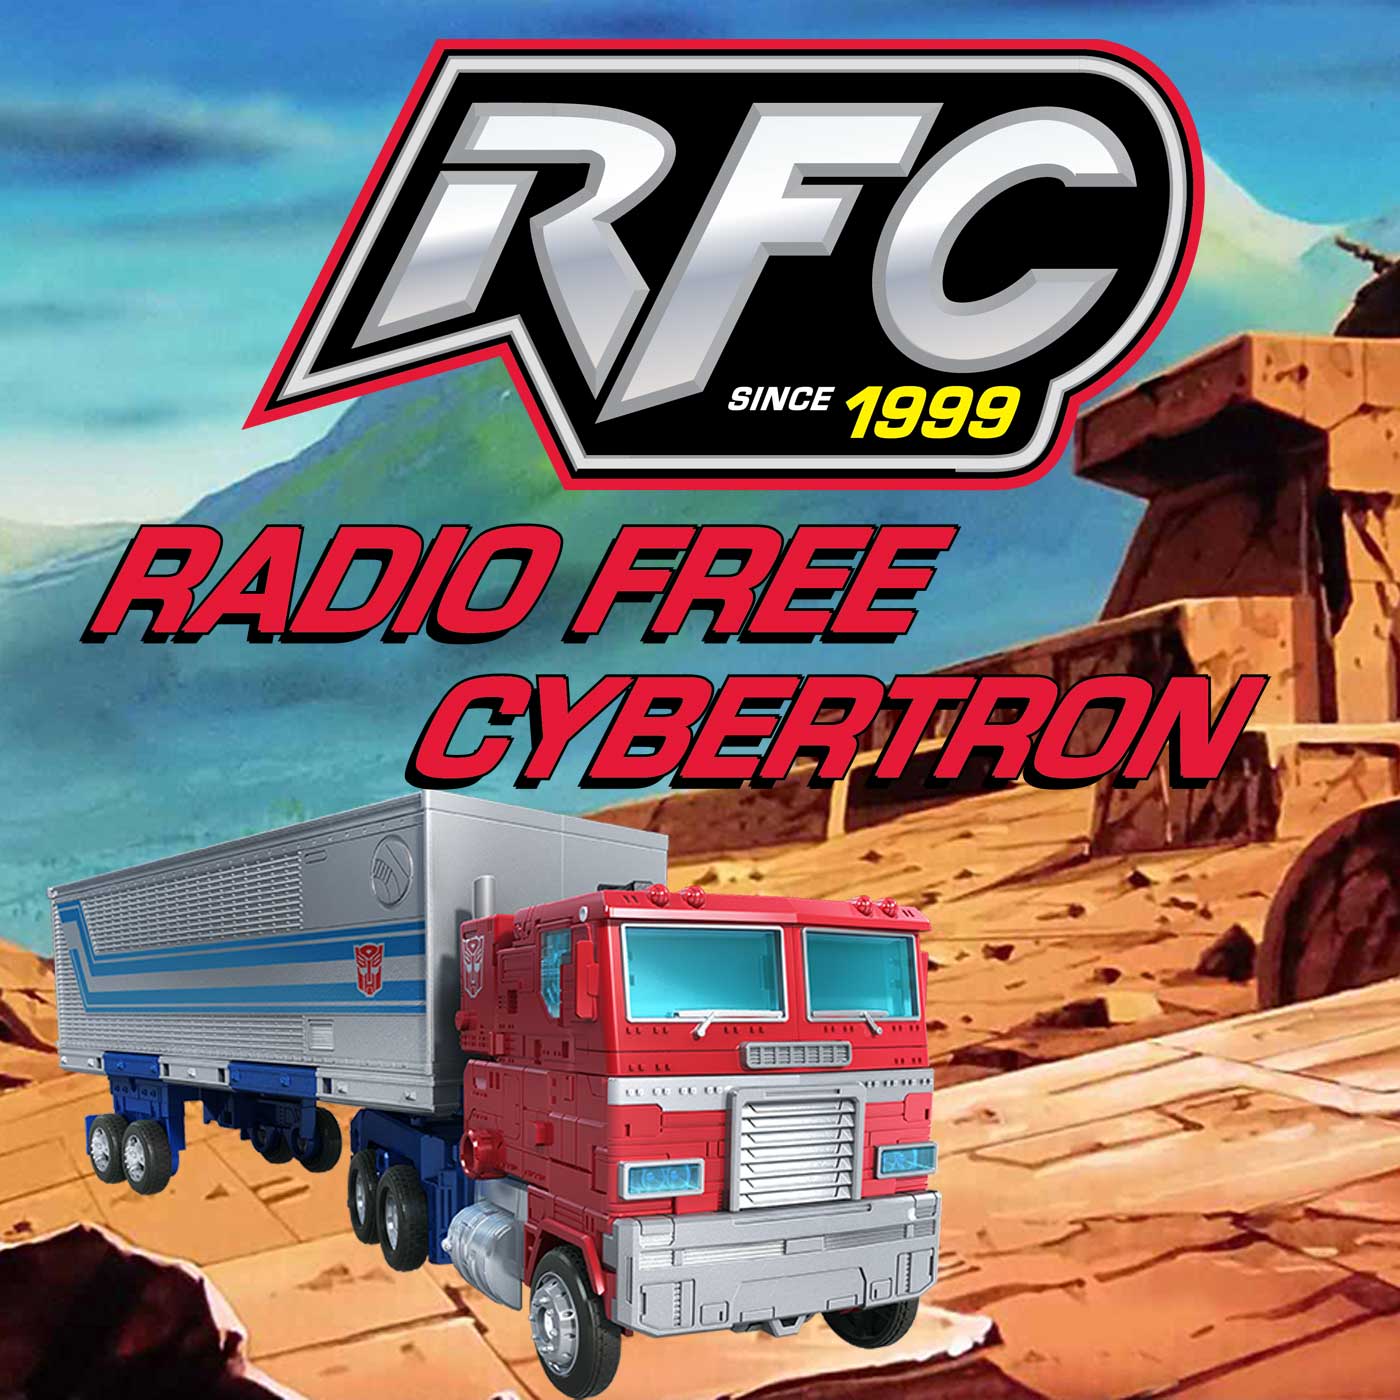 Toy Fair Live Stream Podcast Radio Free Cybertron